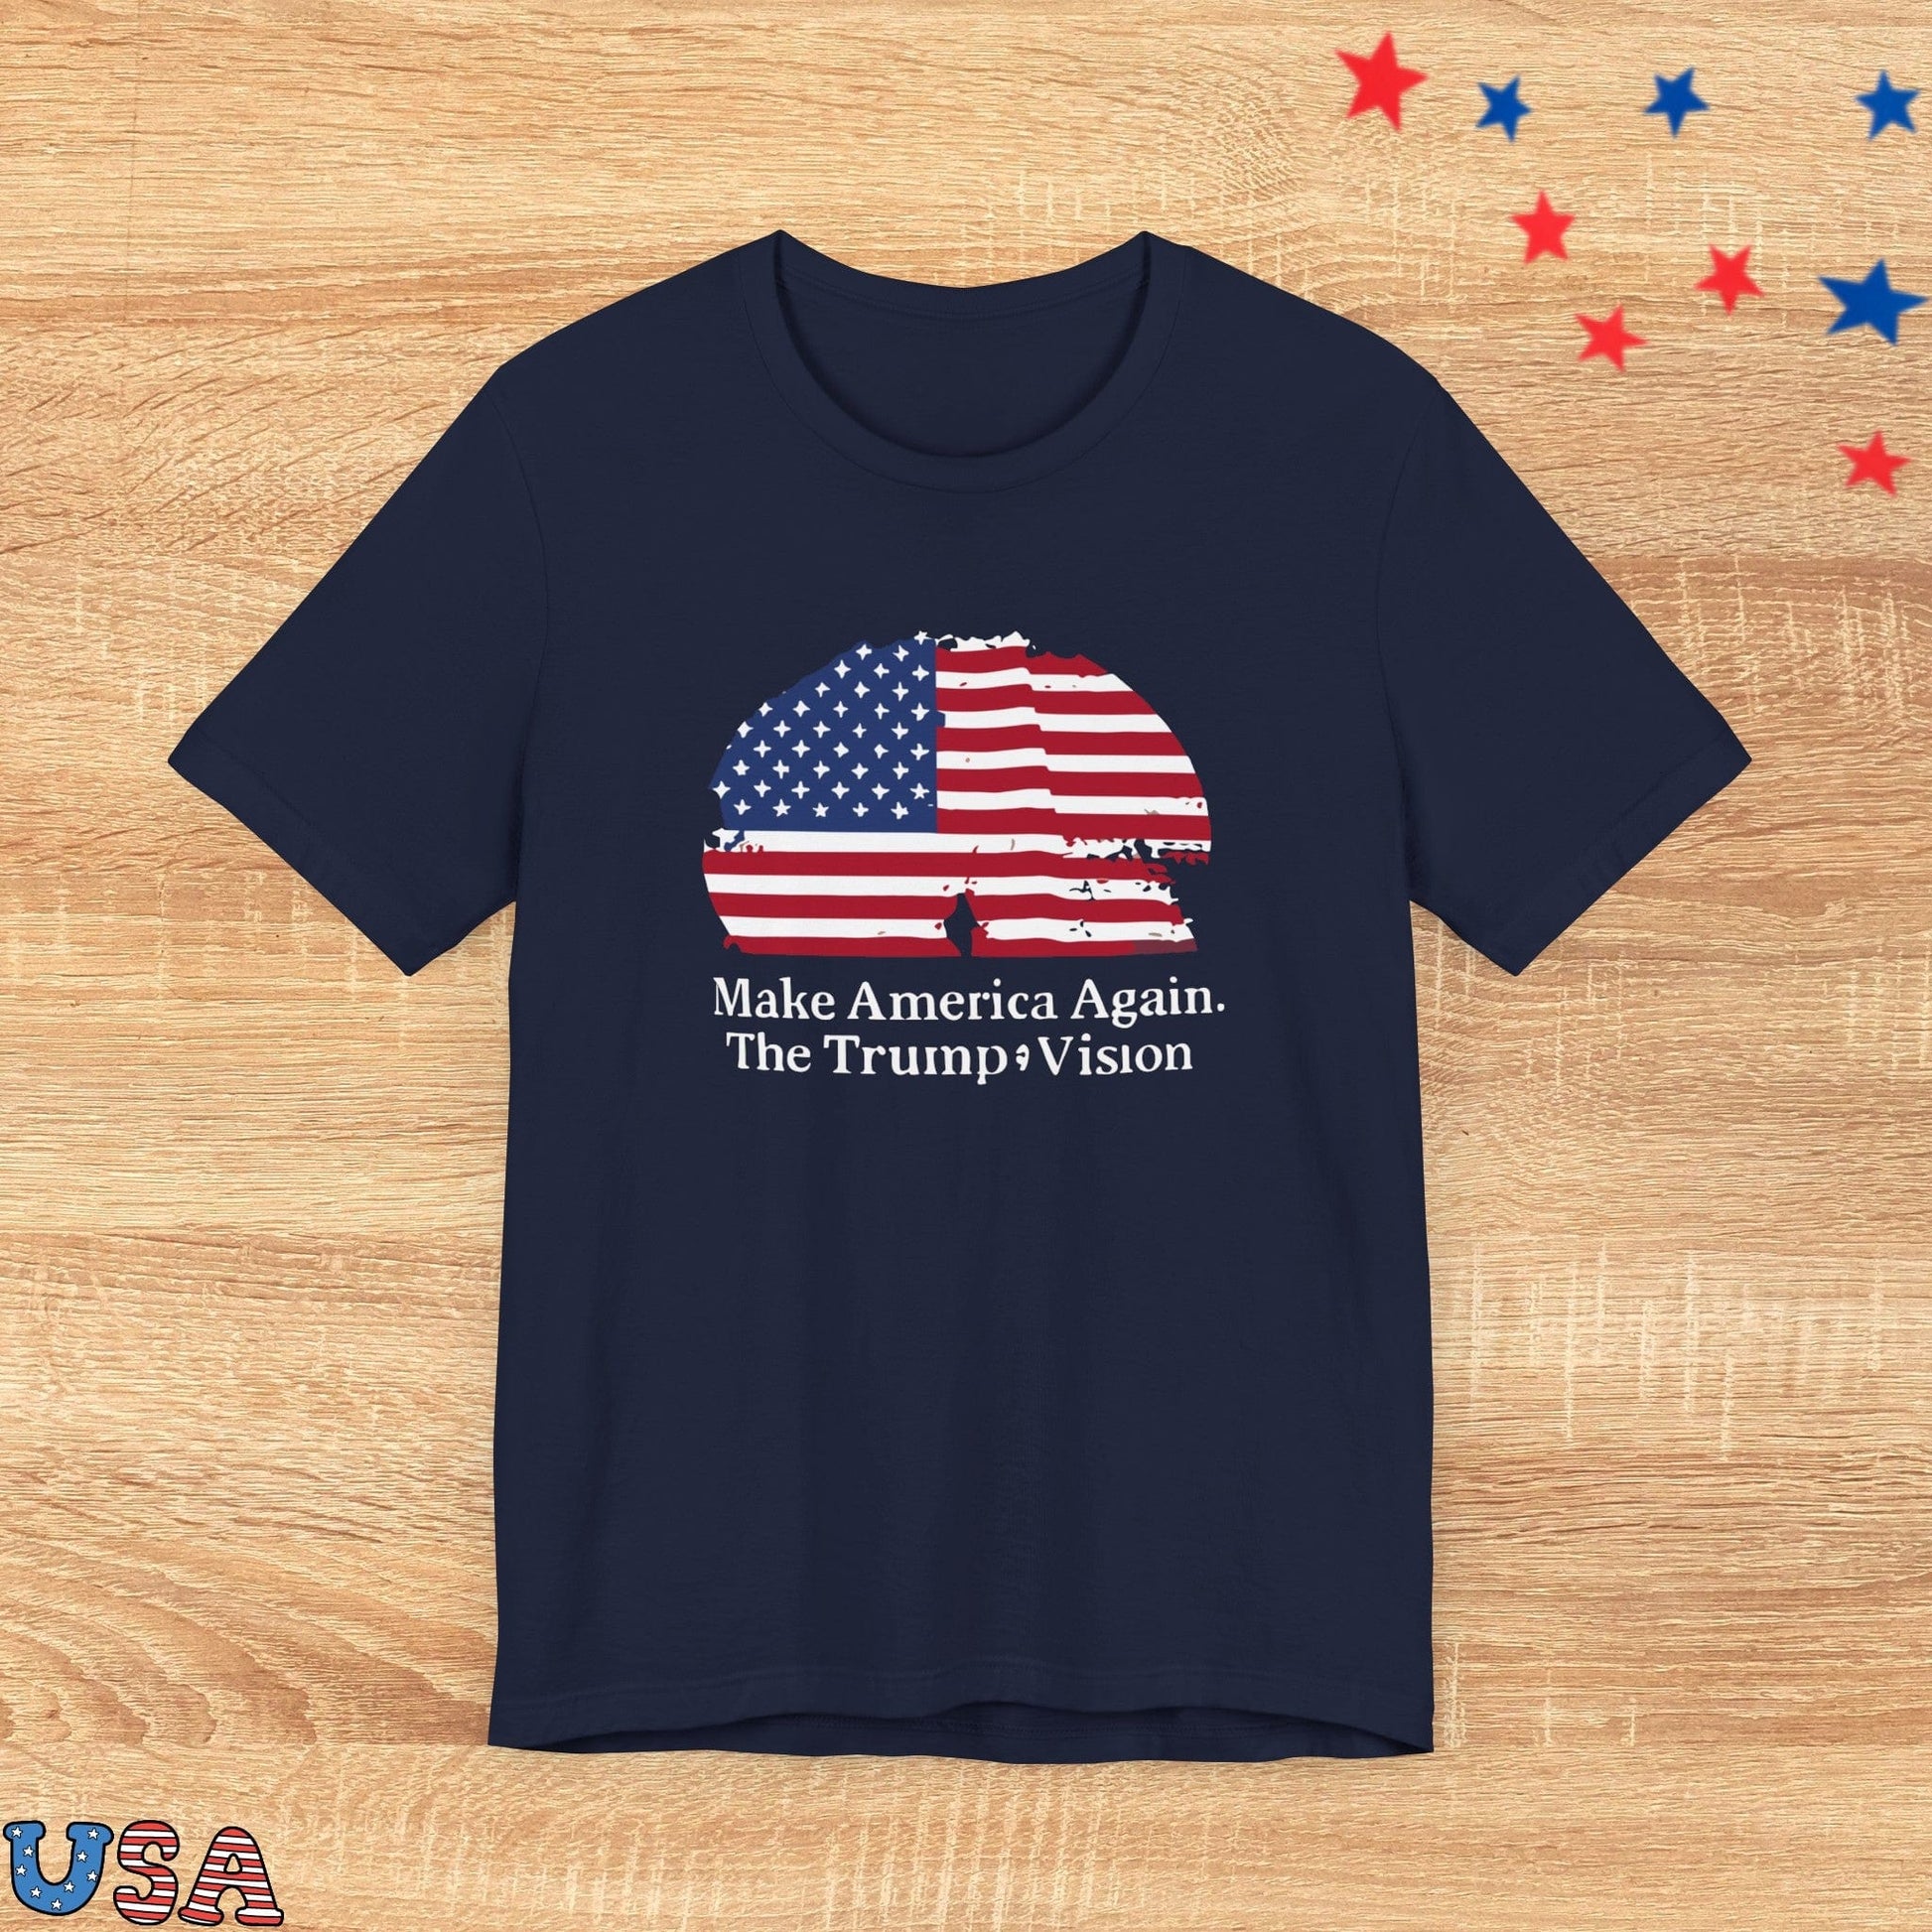 patriotic stars T-Shirt Navy / XS Make America Again! The Trump Vision